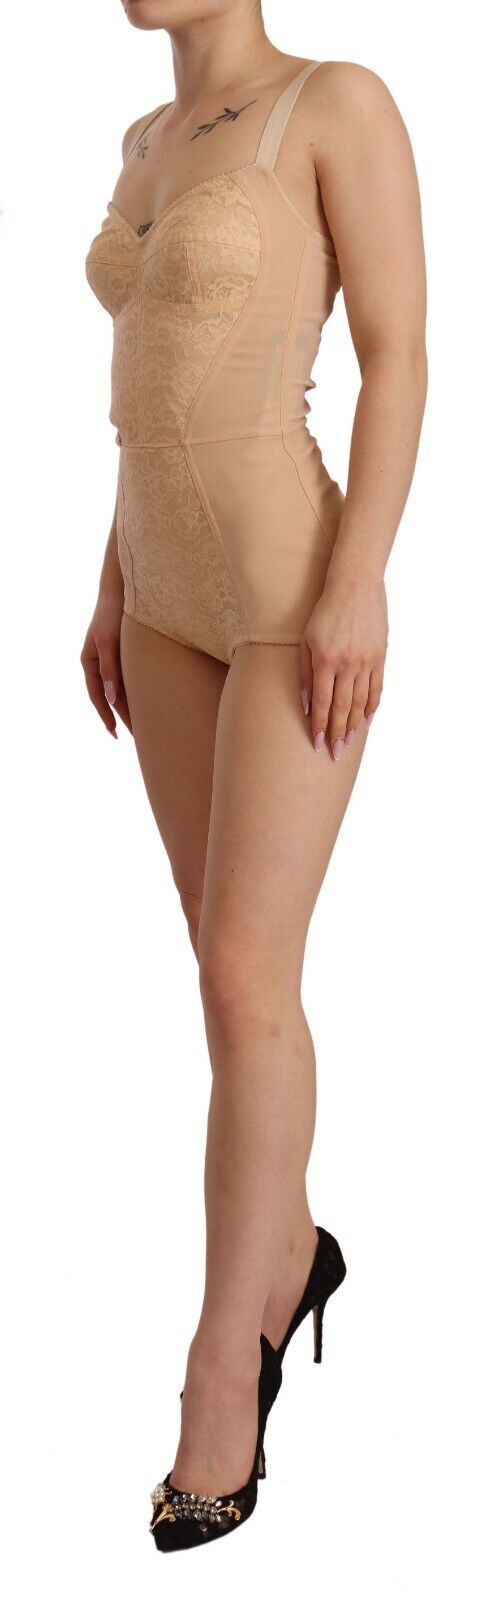 Beige Nylon Floral Lace Bodysuit Underwear